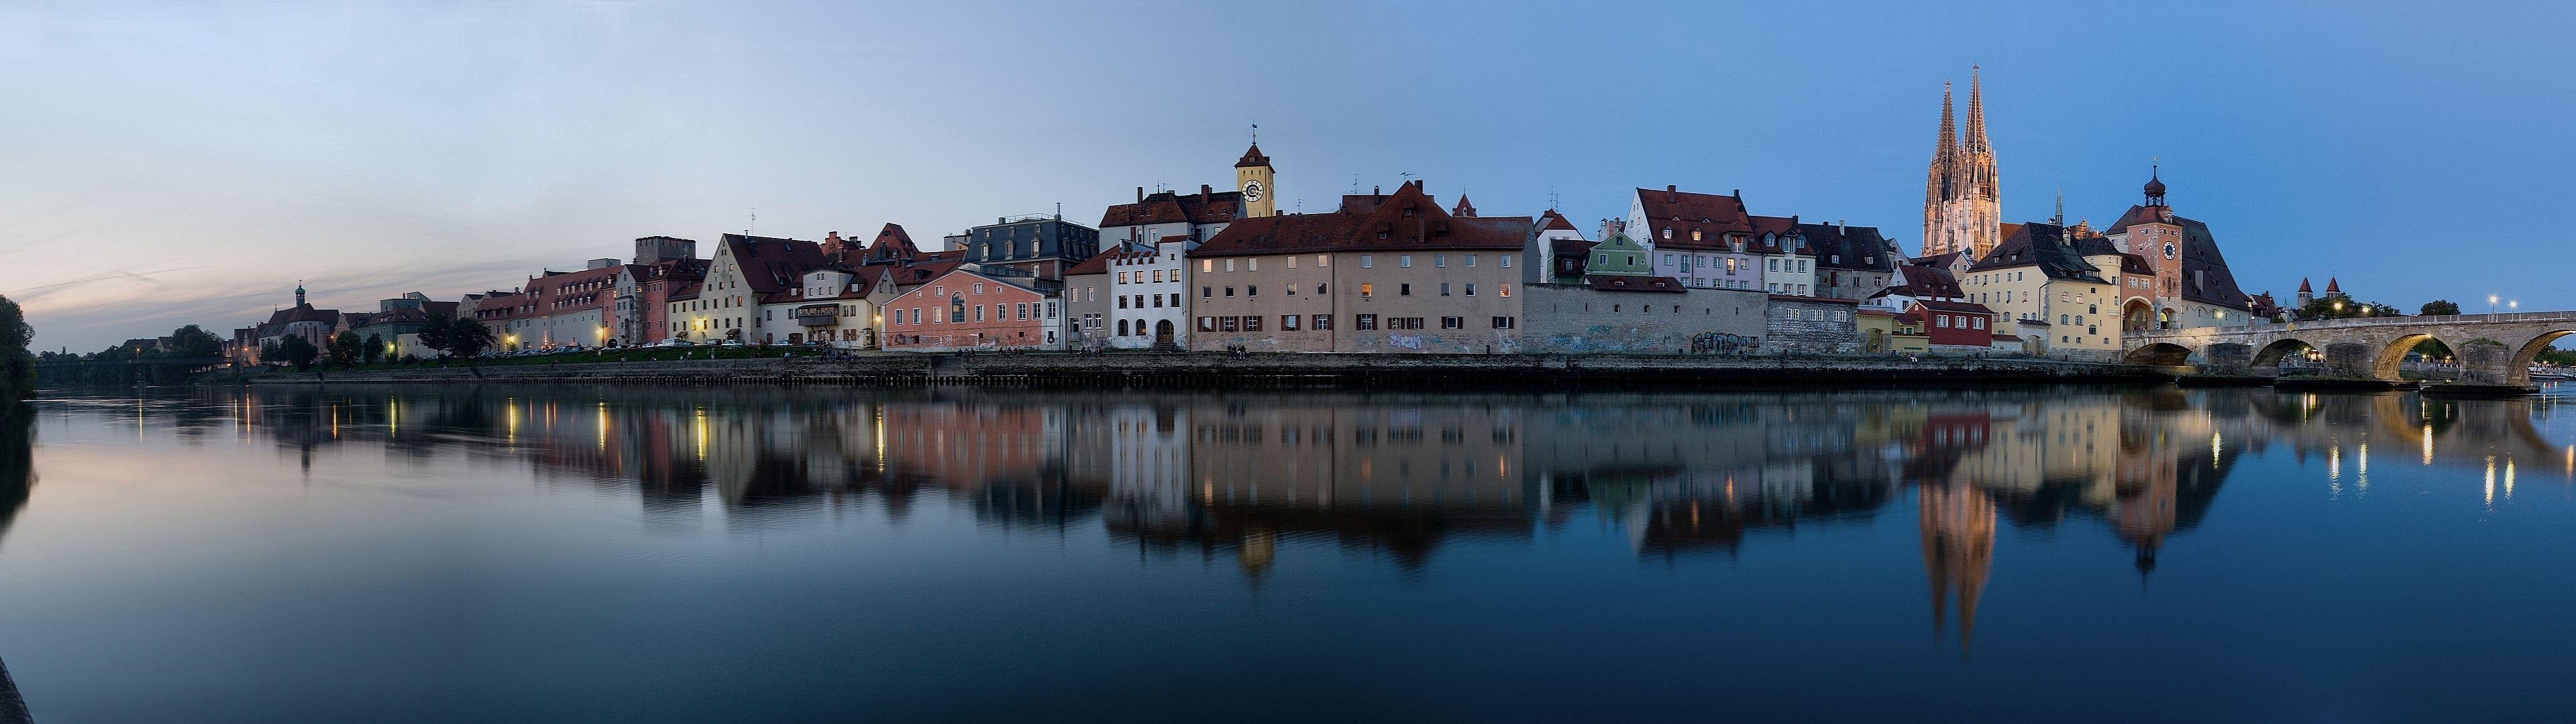 Regensburg, Germany, City, Reflection, River, Sunset, Multiple